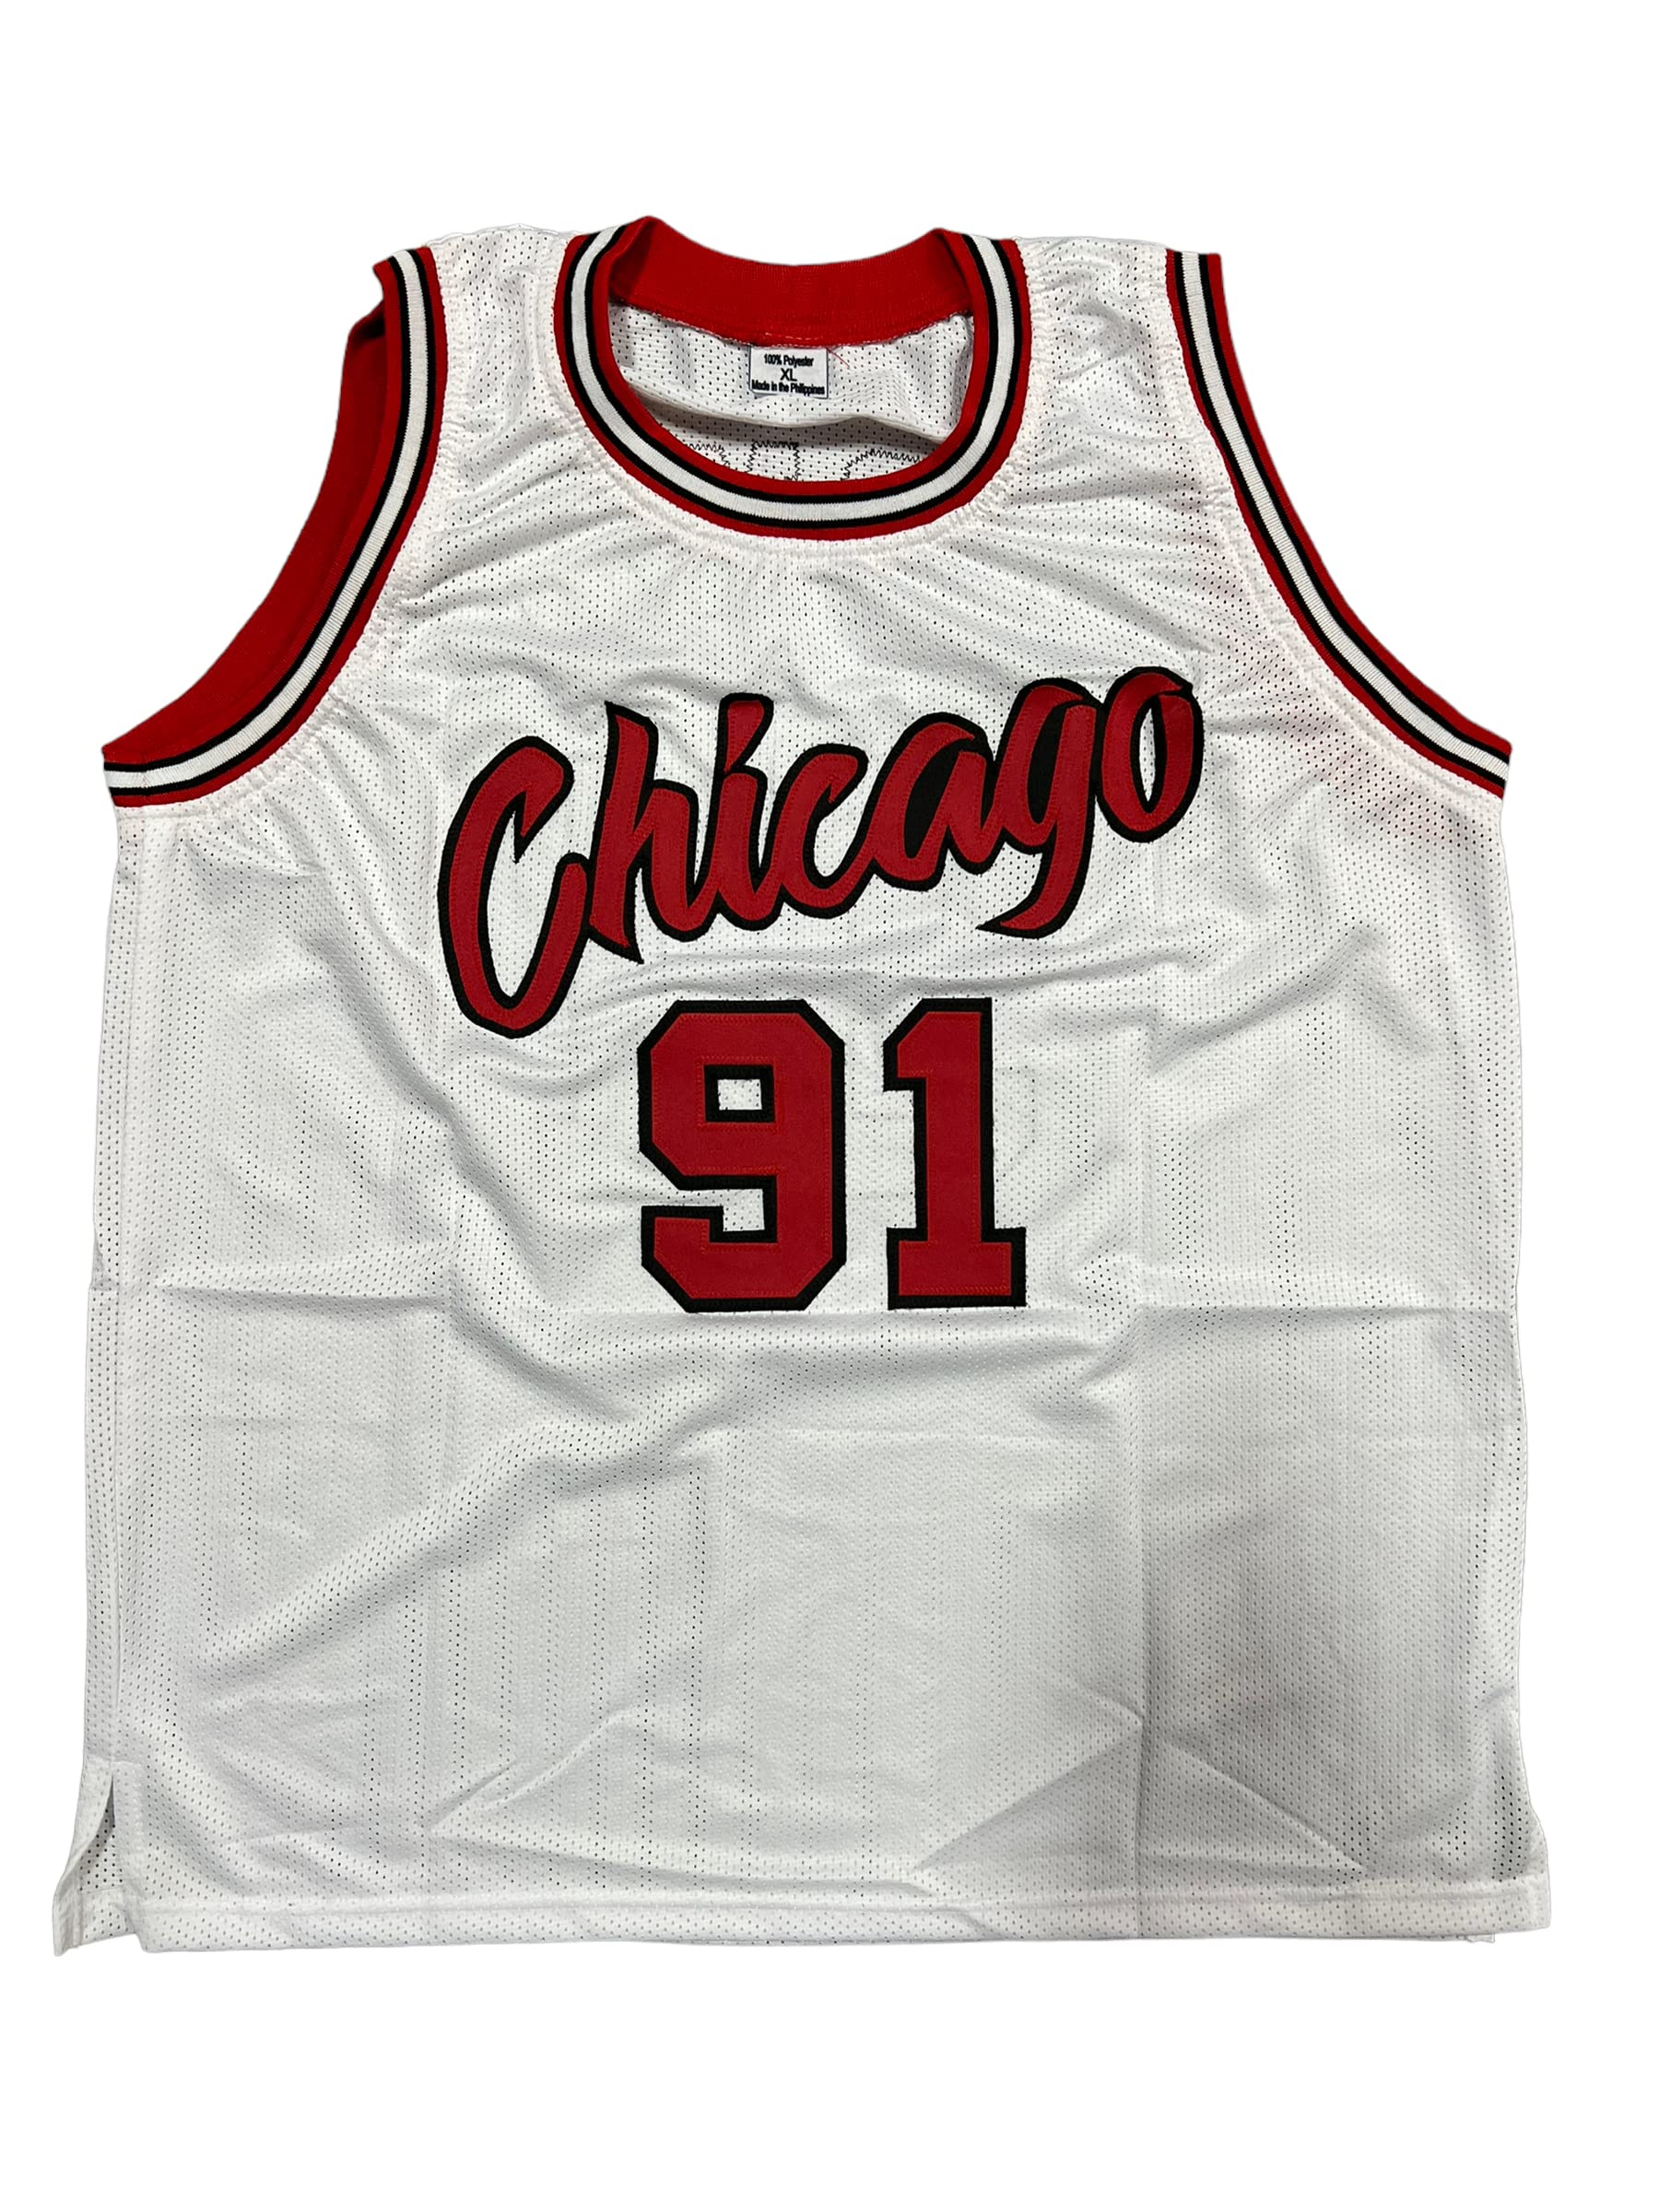 Dennis Rodman Signed Chicago Bulls Jersey - JSA Certified